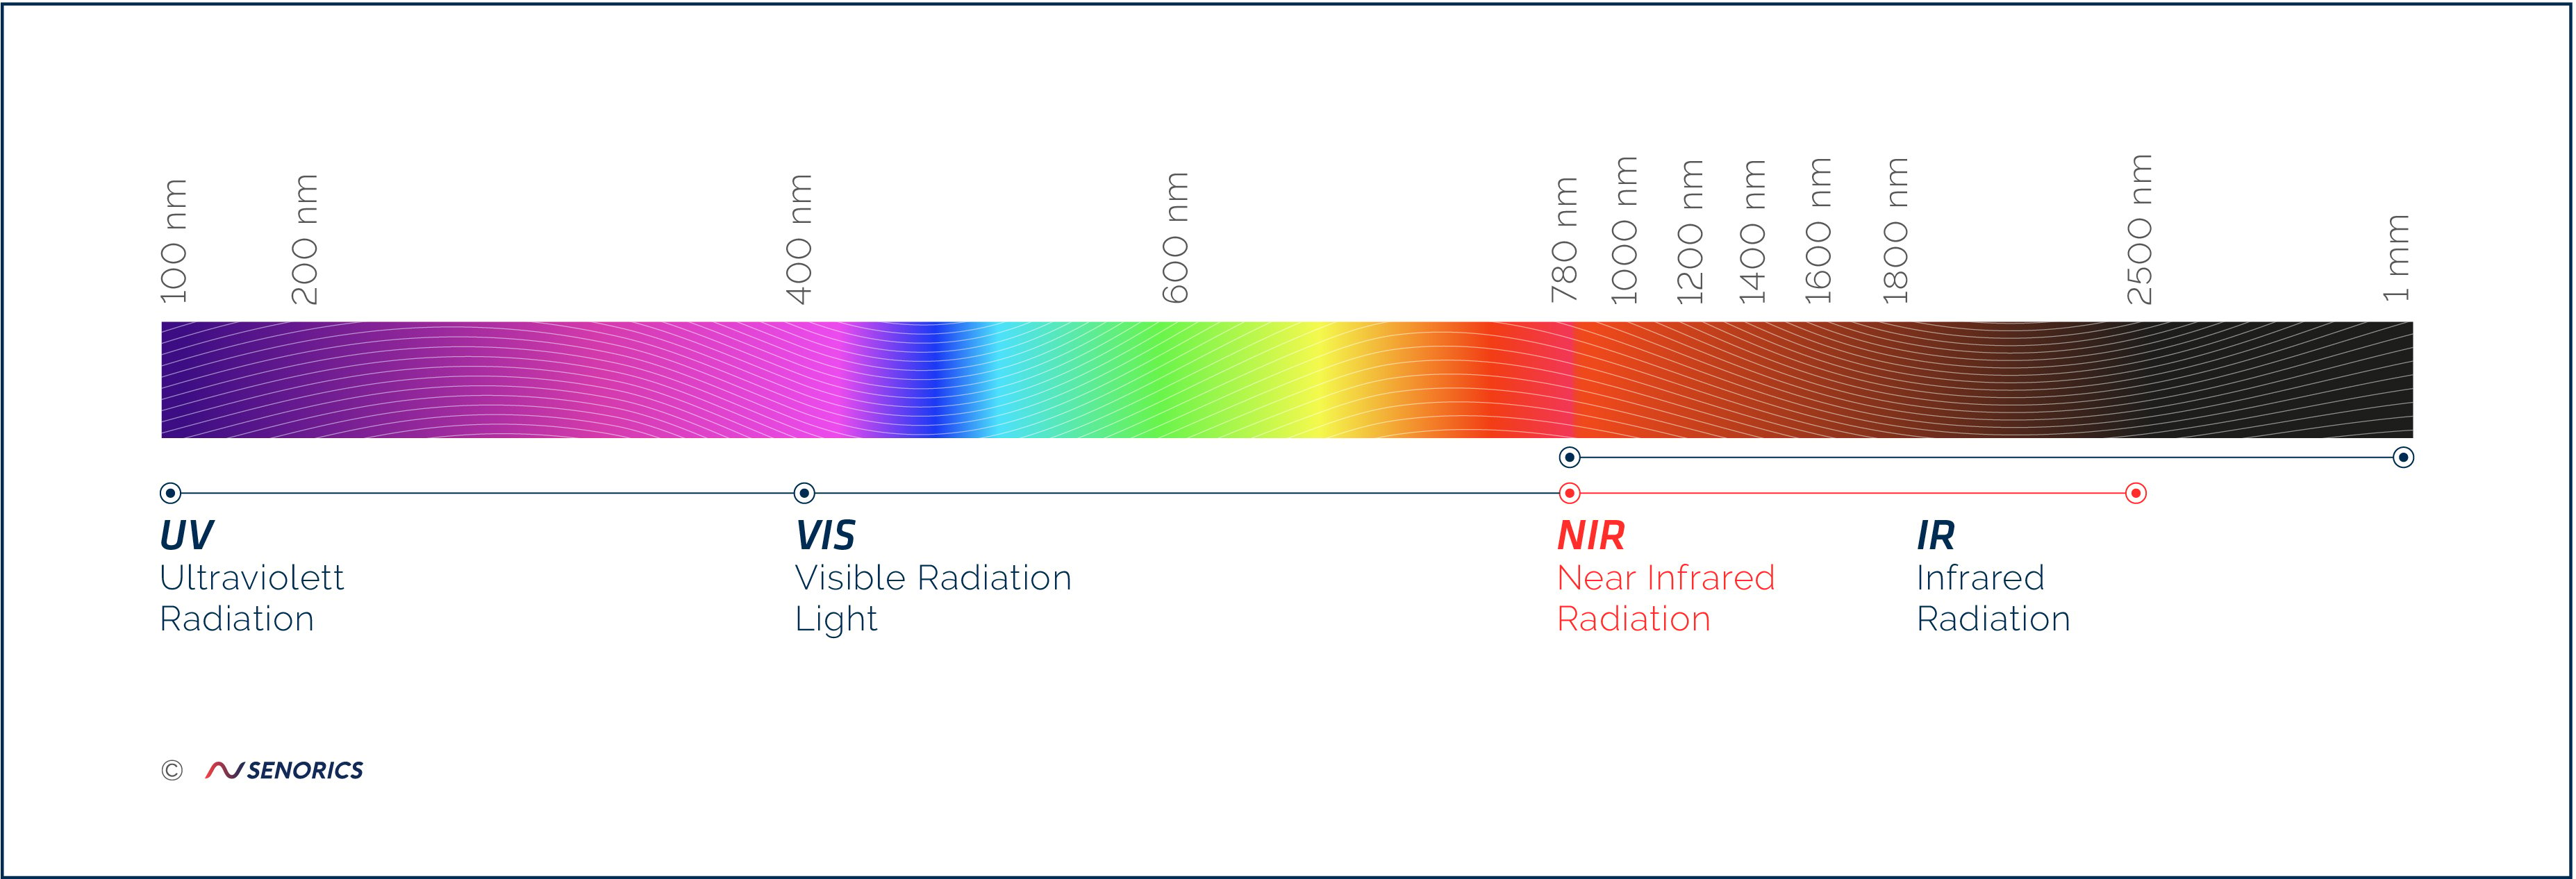 Different wavelength ranges